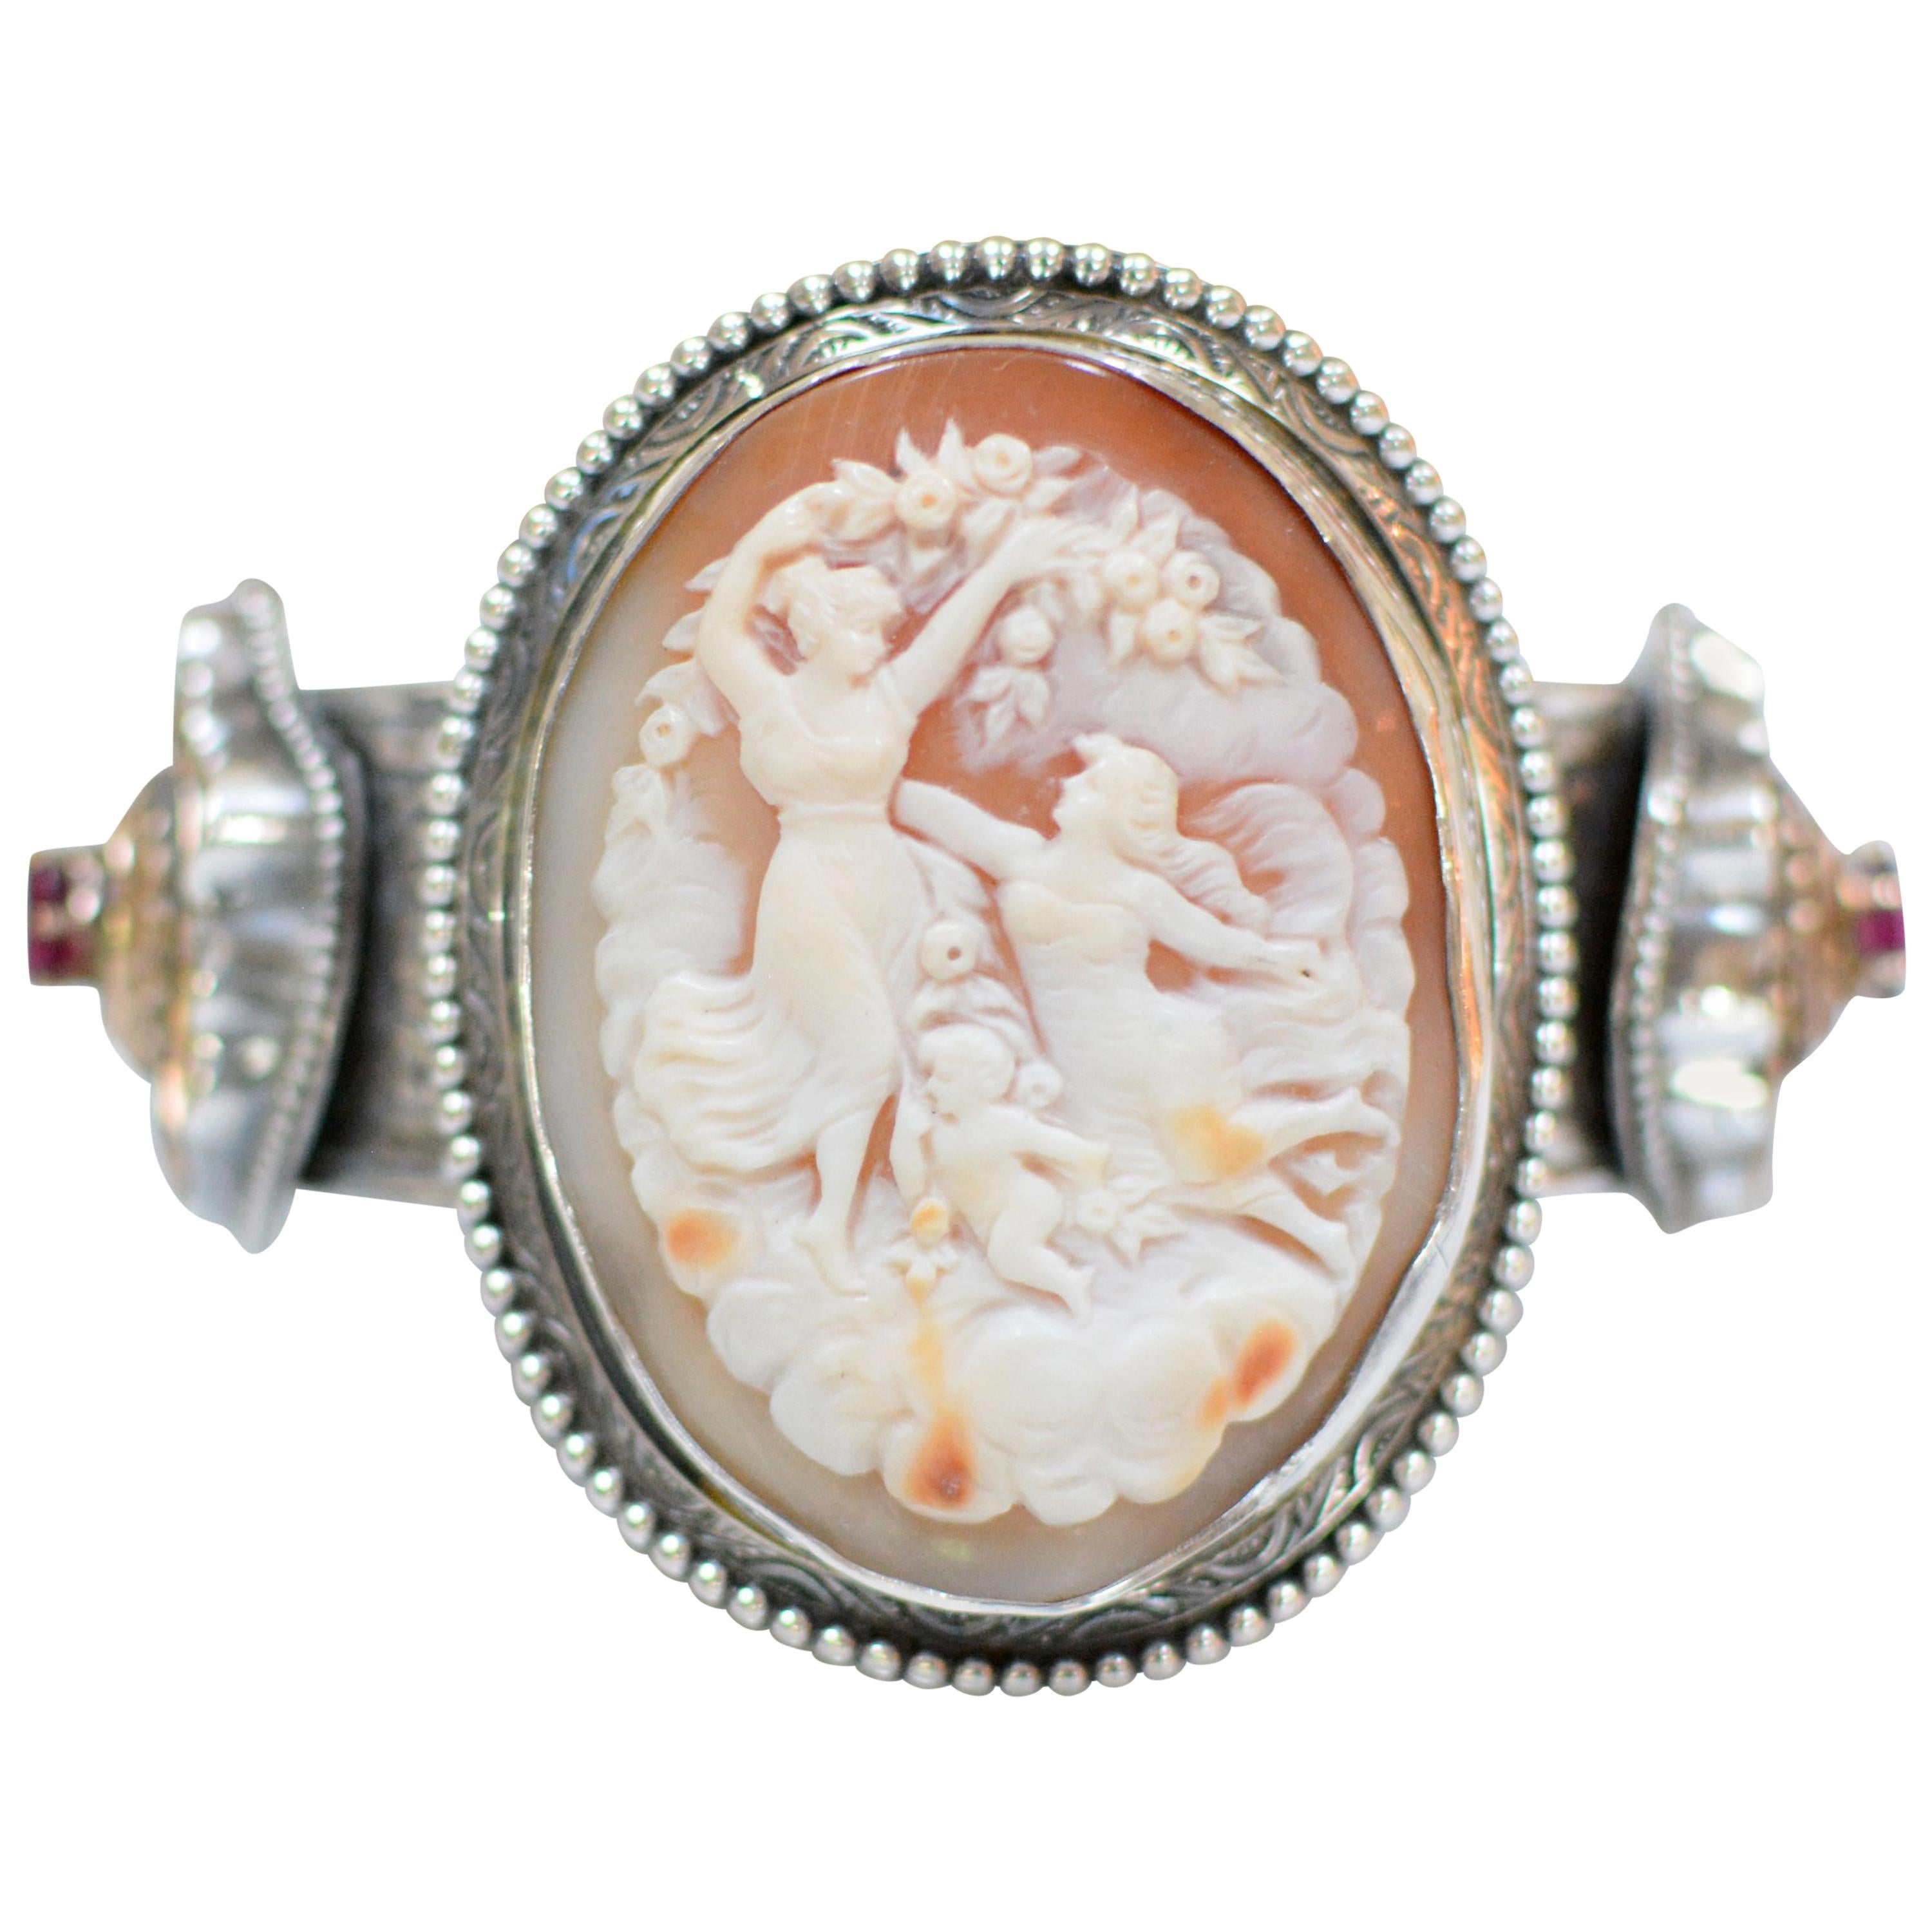 Jill Garber Antique Goddess and Cherub Cameo Sterling Silver Cuff Bracelet 